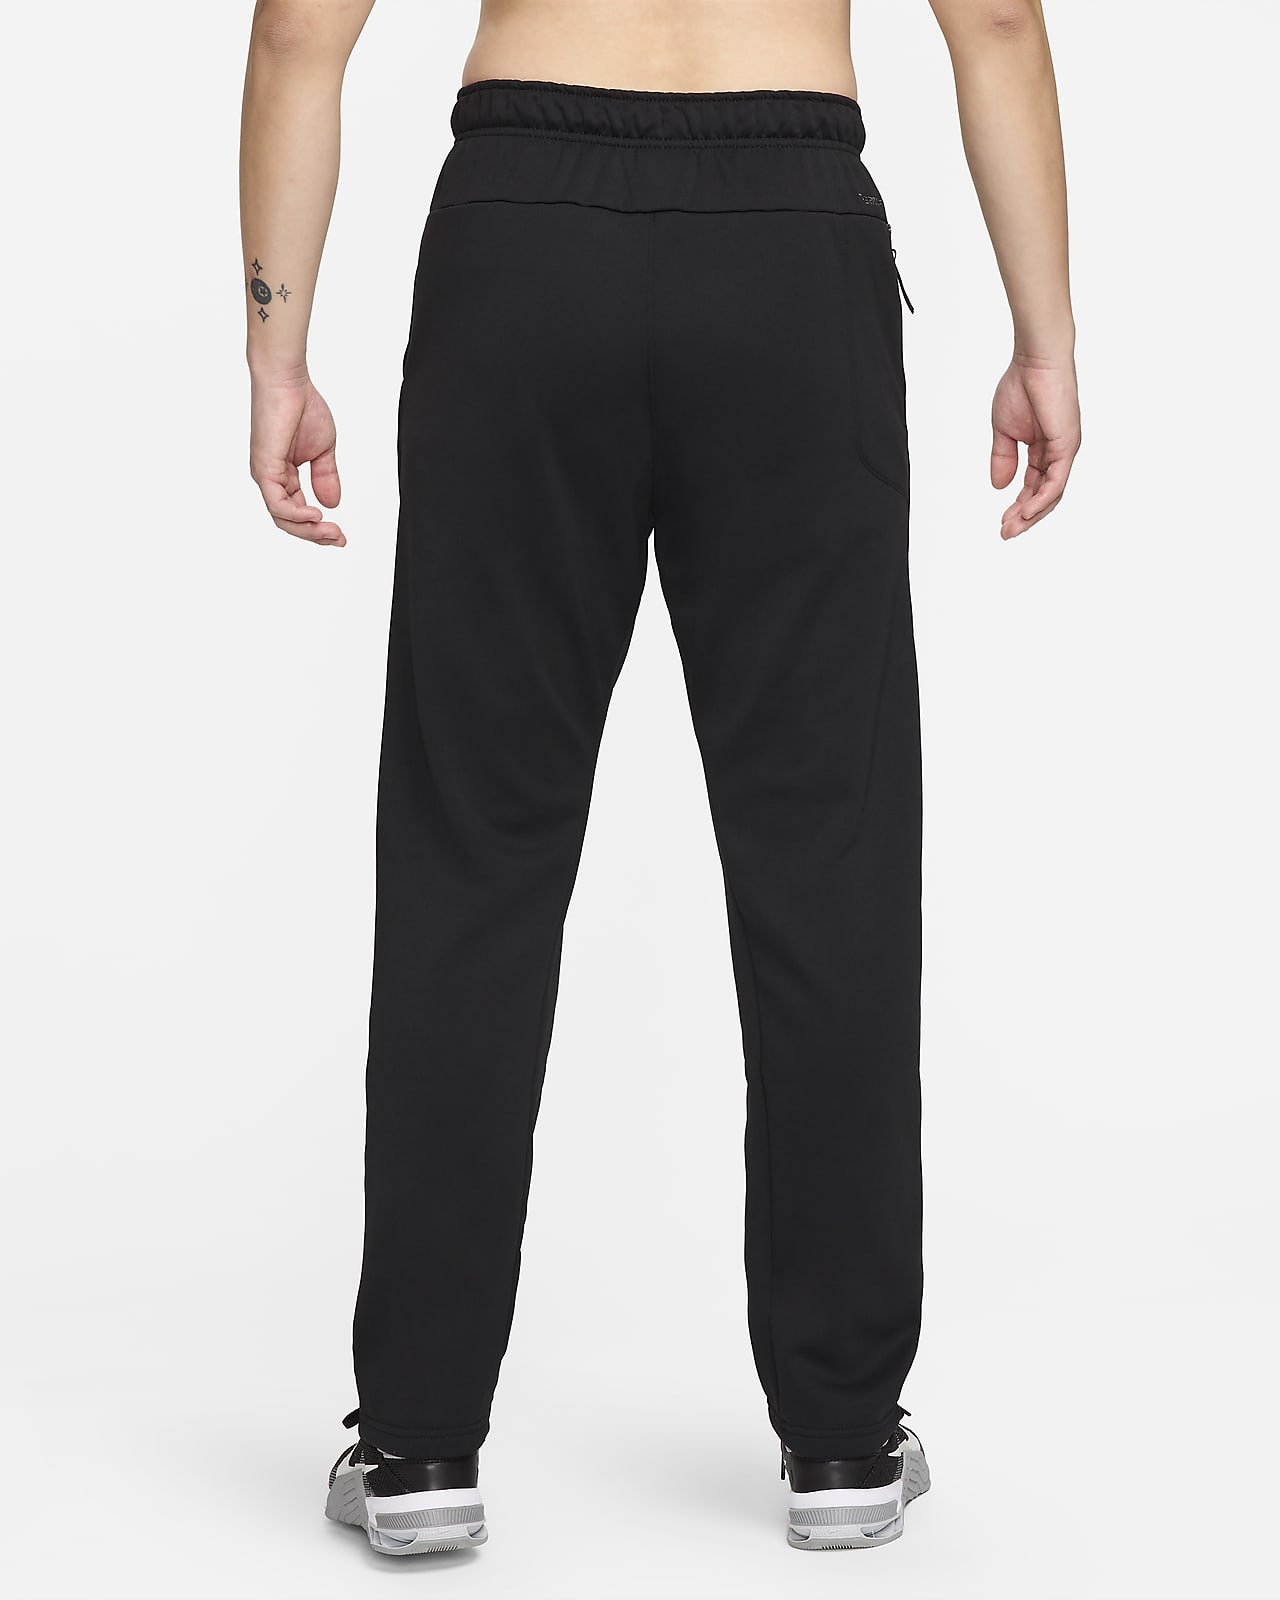 adidas Collective Power Extra Slim Pants - Black